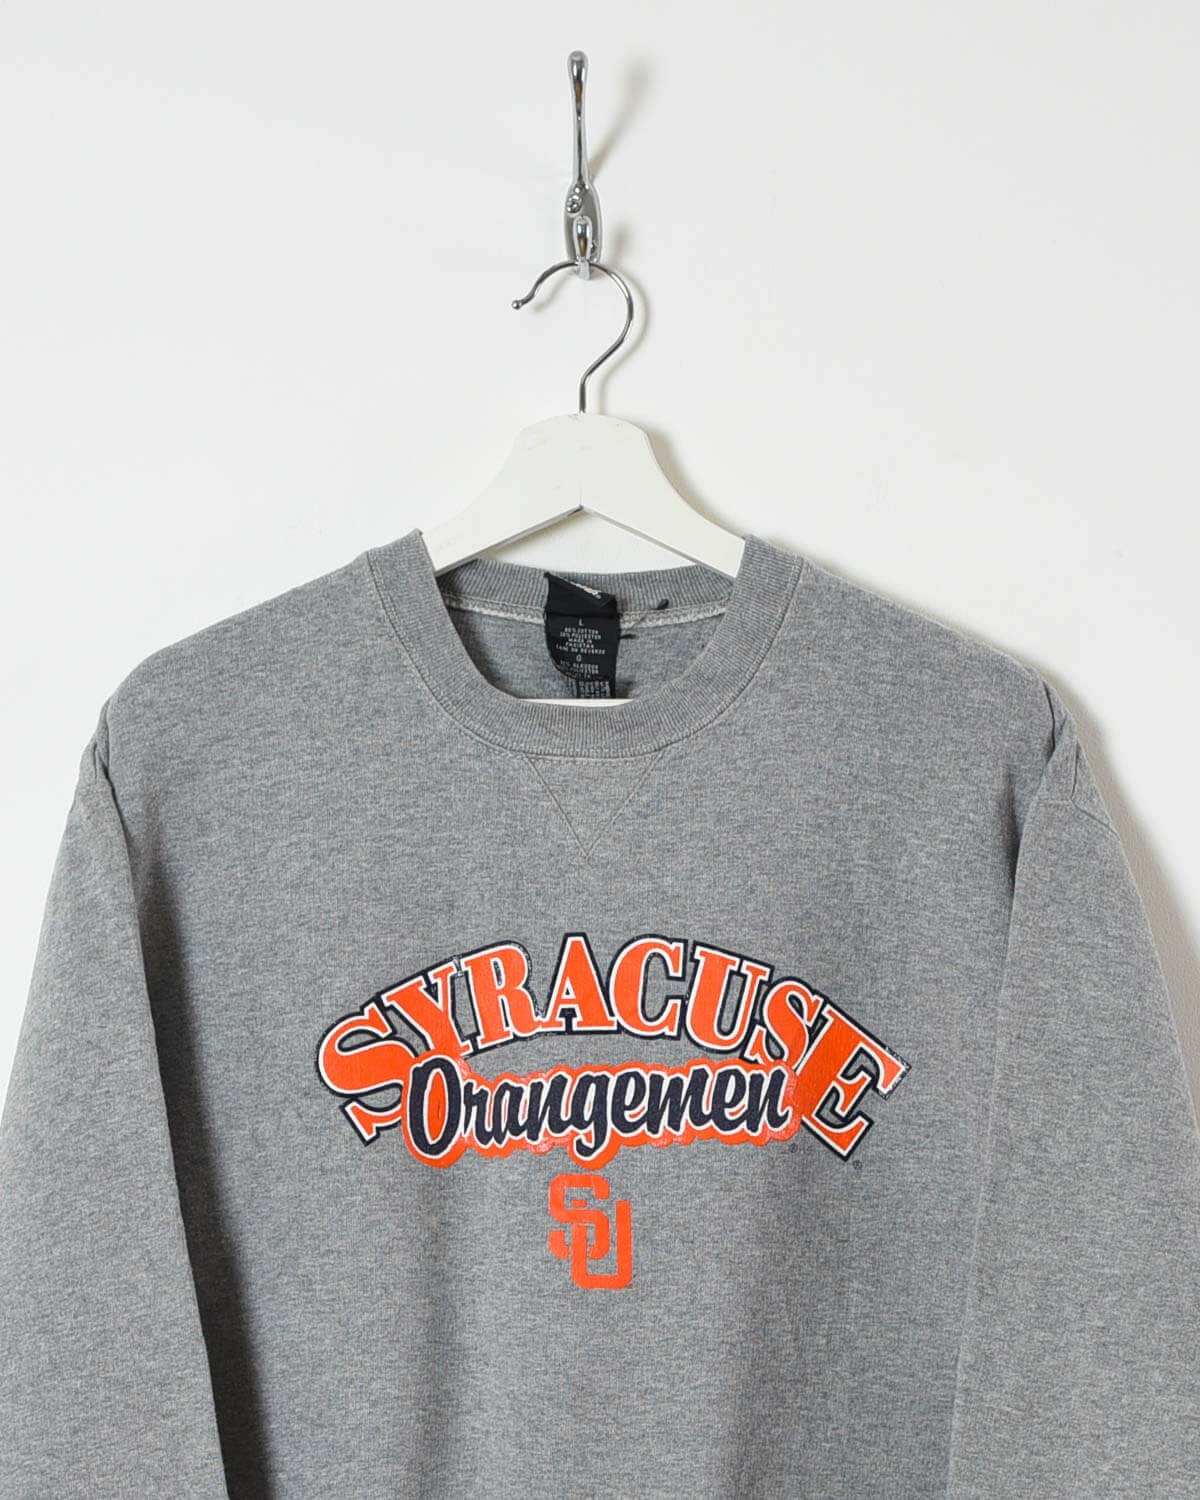 Starter Syracuse Orangemen Sweatshirt - Large - Domno Vintage 90s, 80s, 00s Retro and Vintage Clothing 